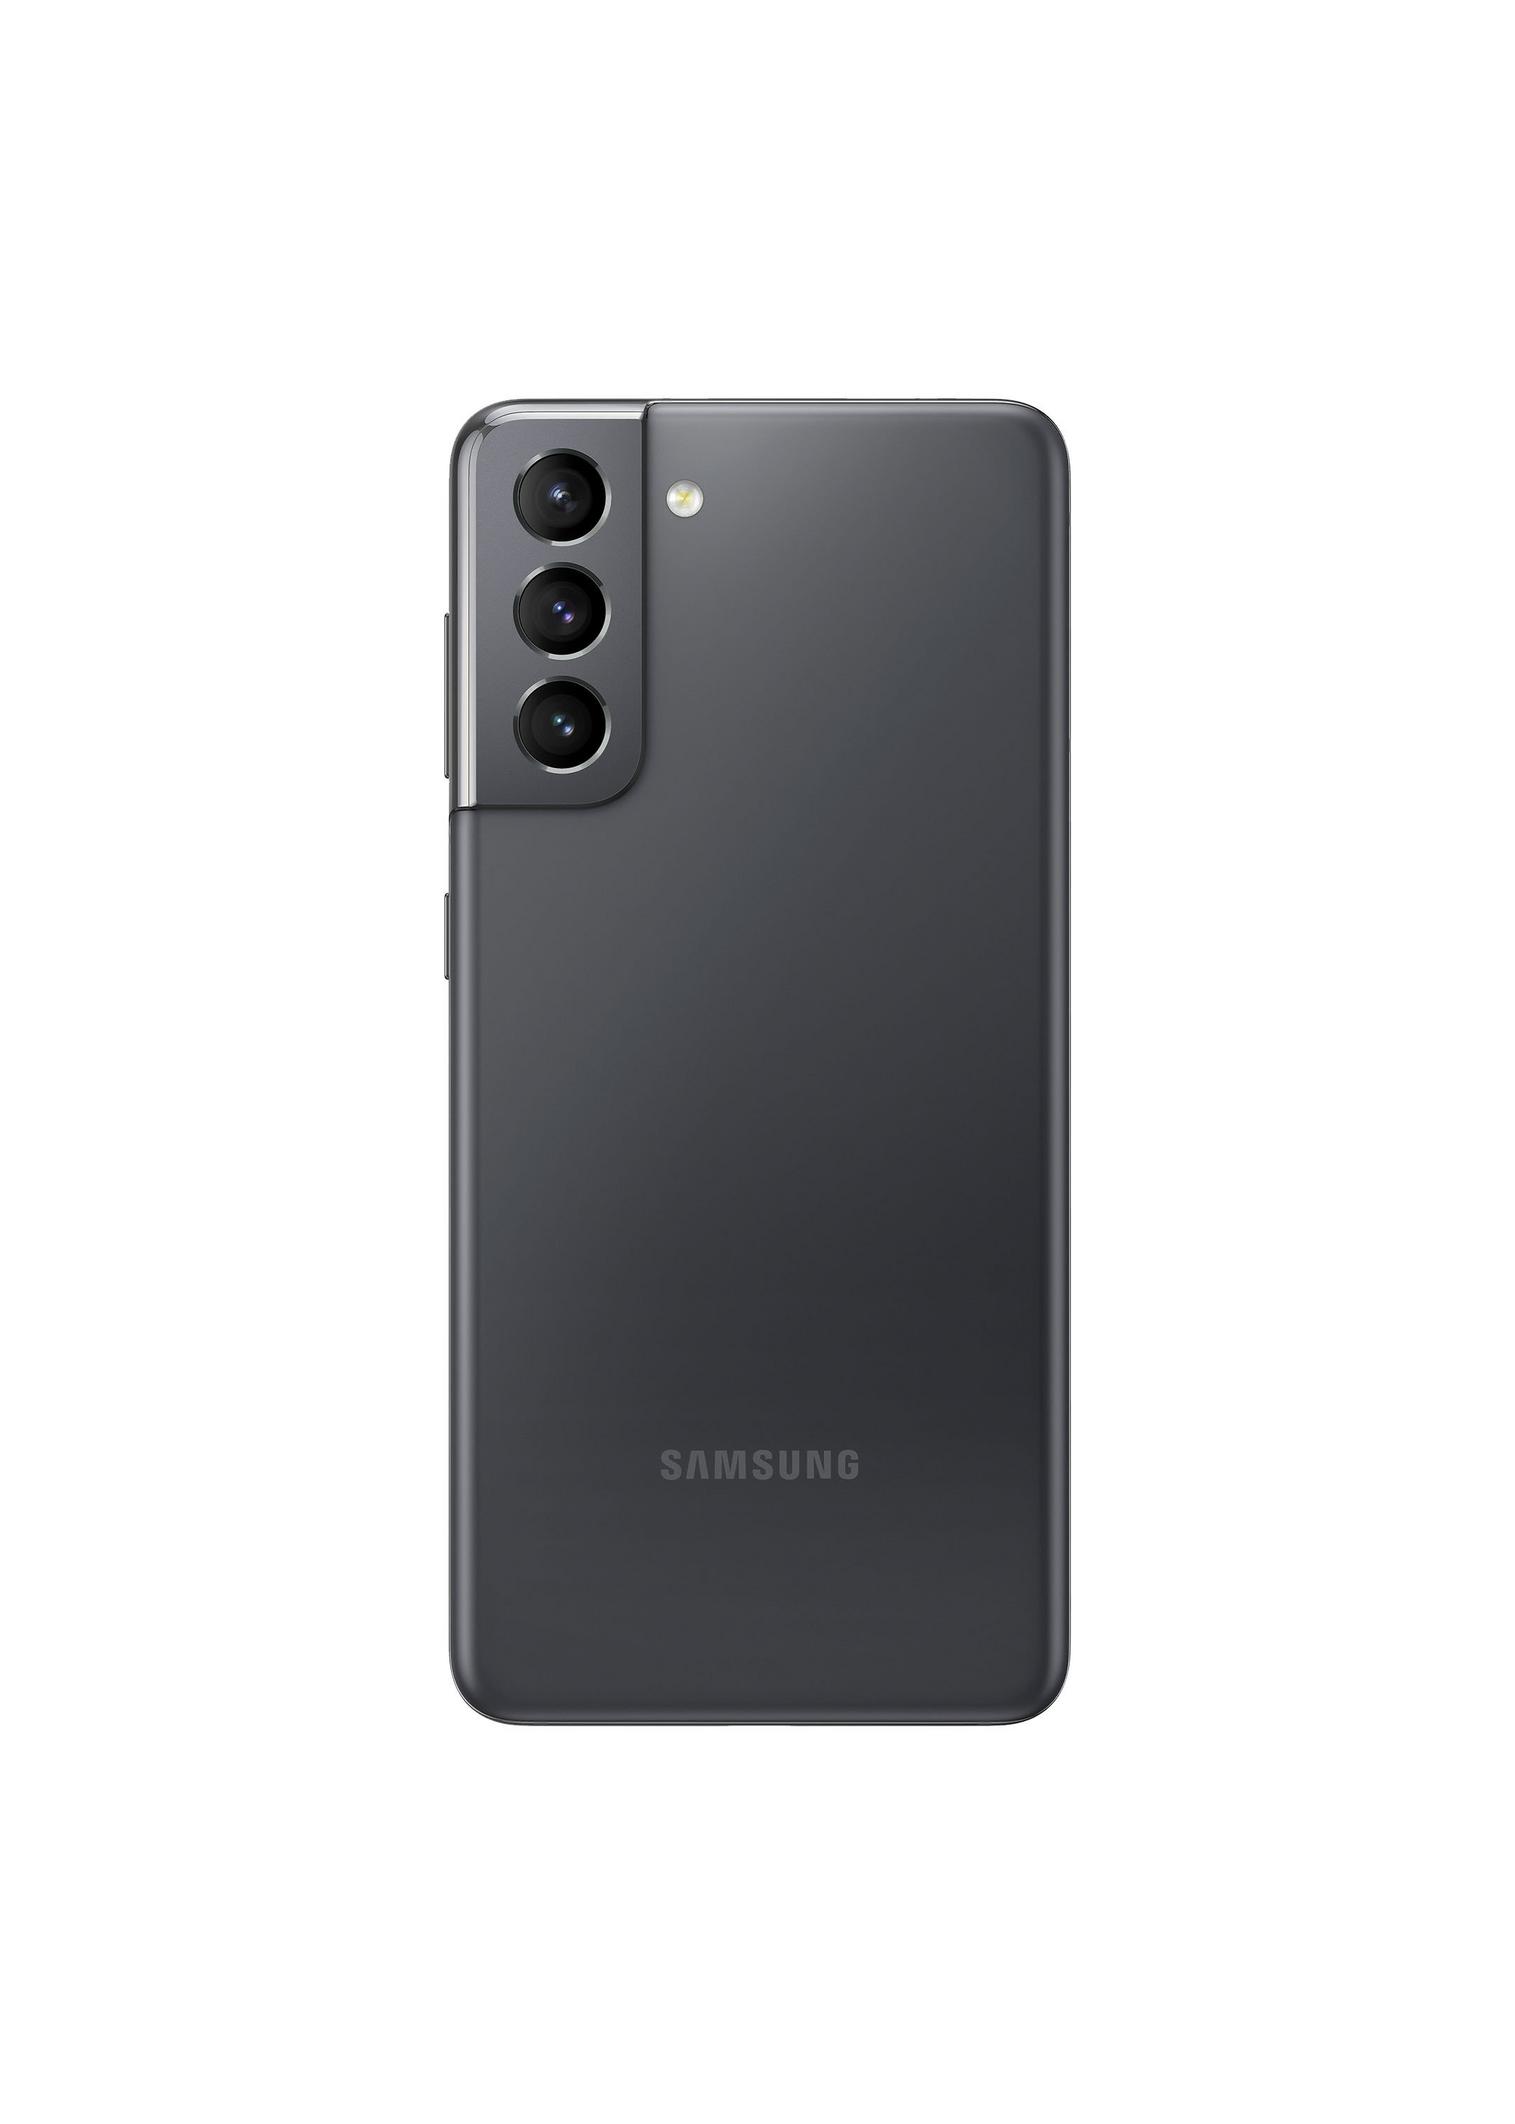 Samsung Galaxy S21 Price in Pakistan 2021